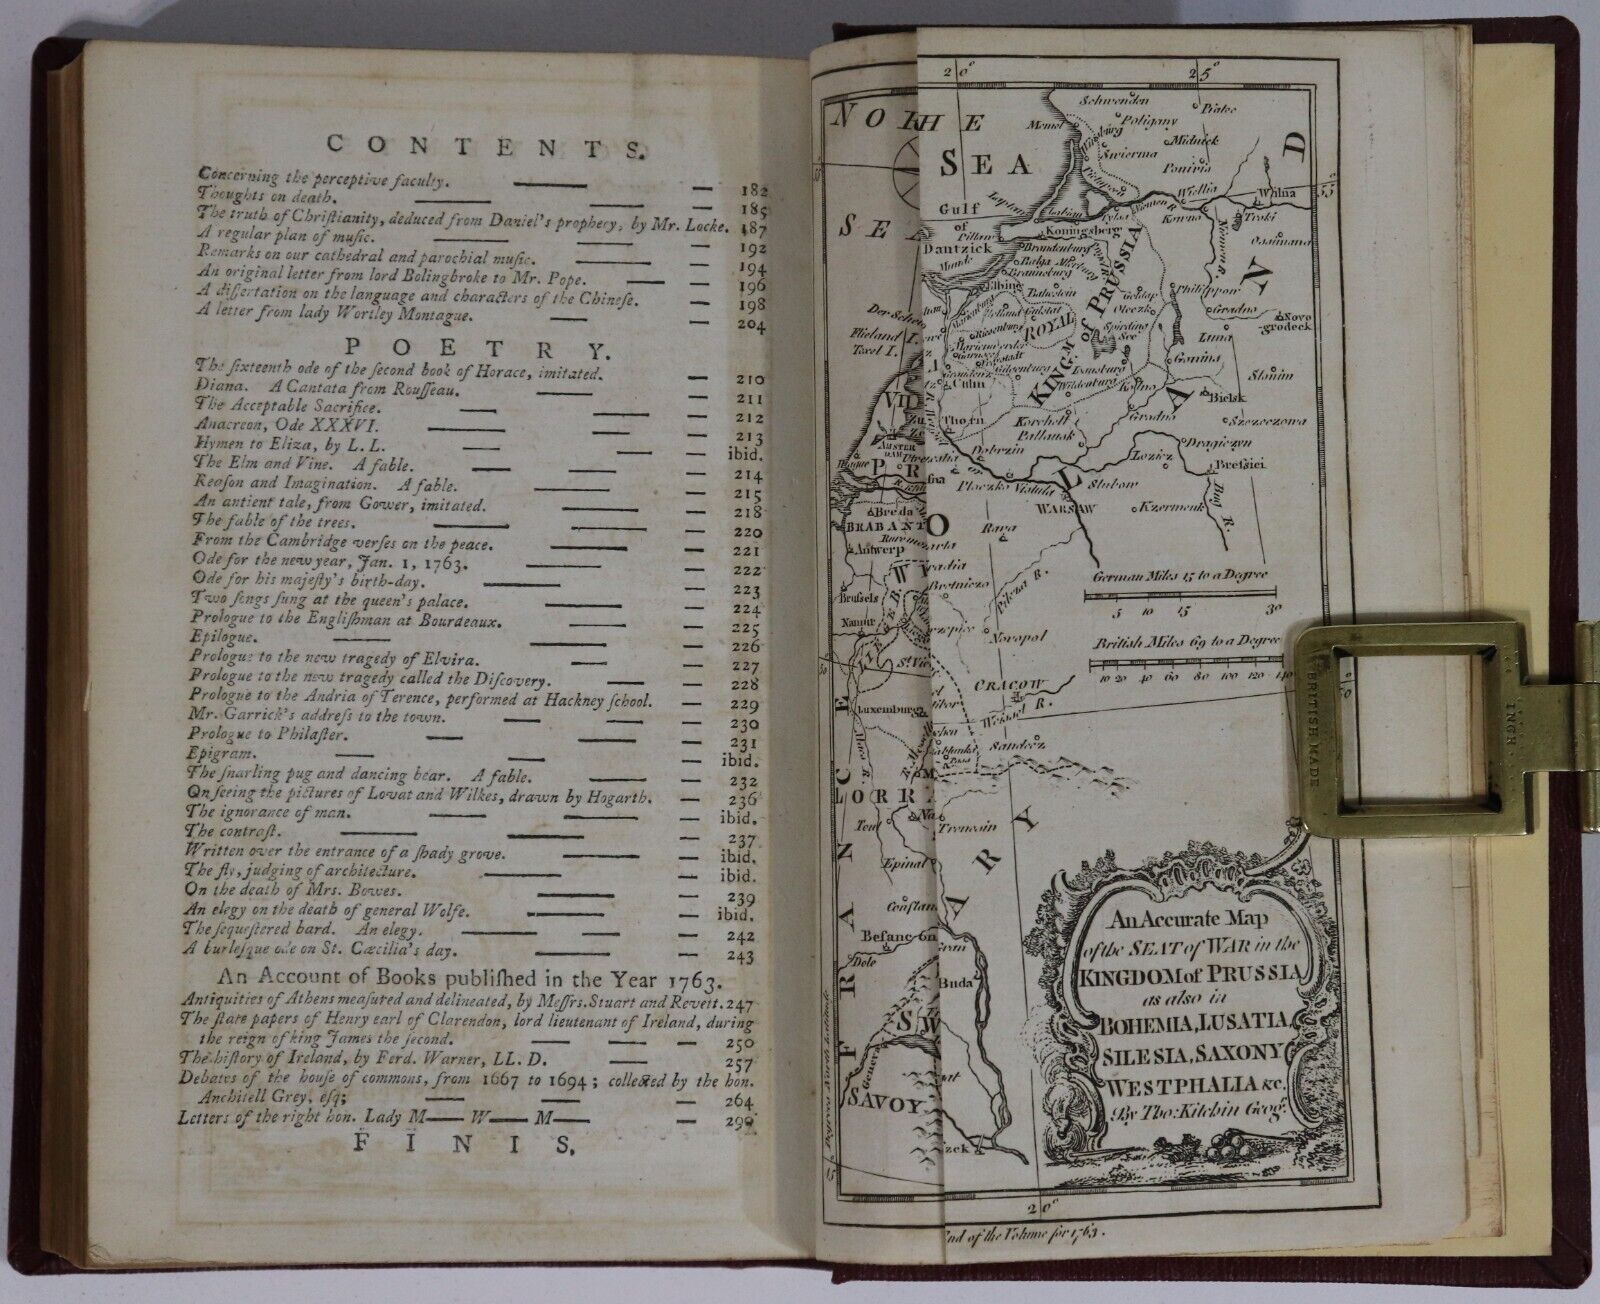 1763-1820 9vol The Annual Register Antiquarian History Politics Books